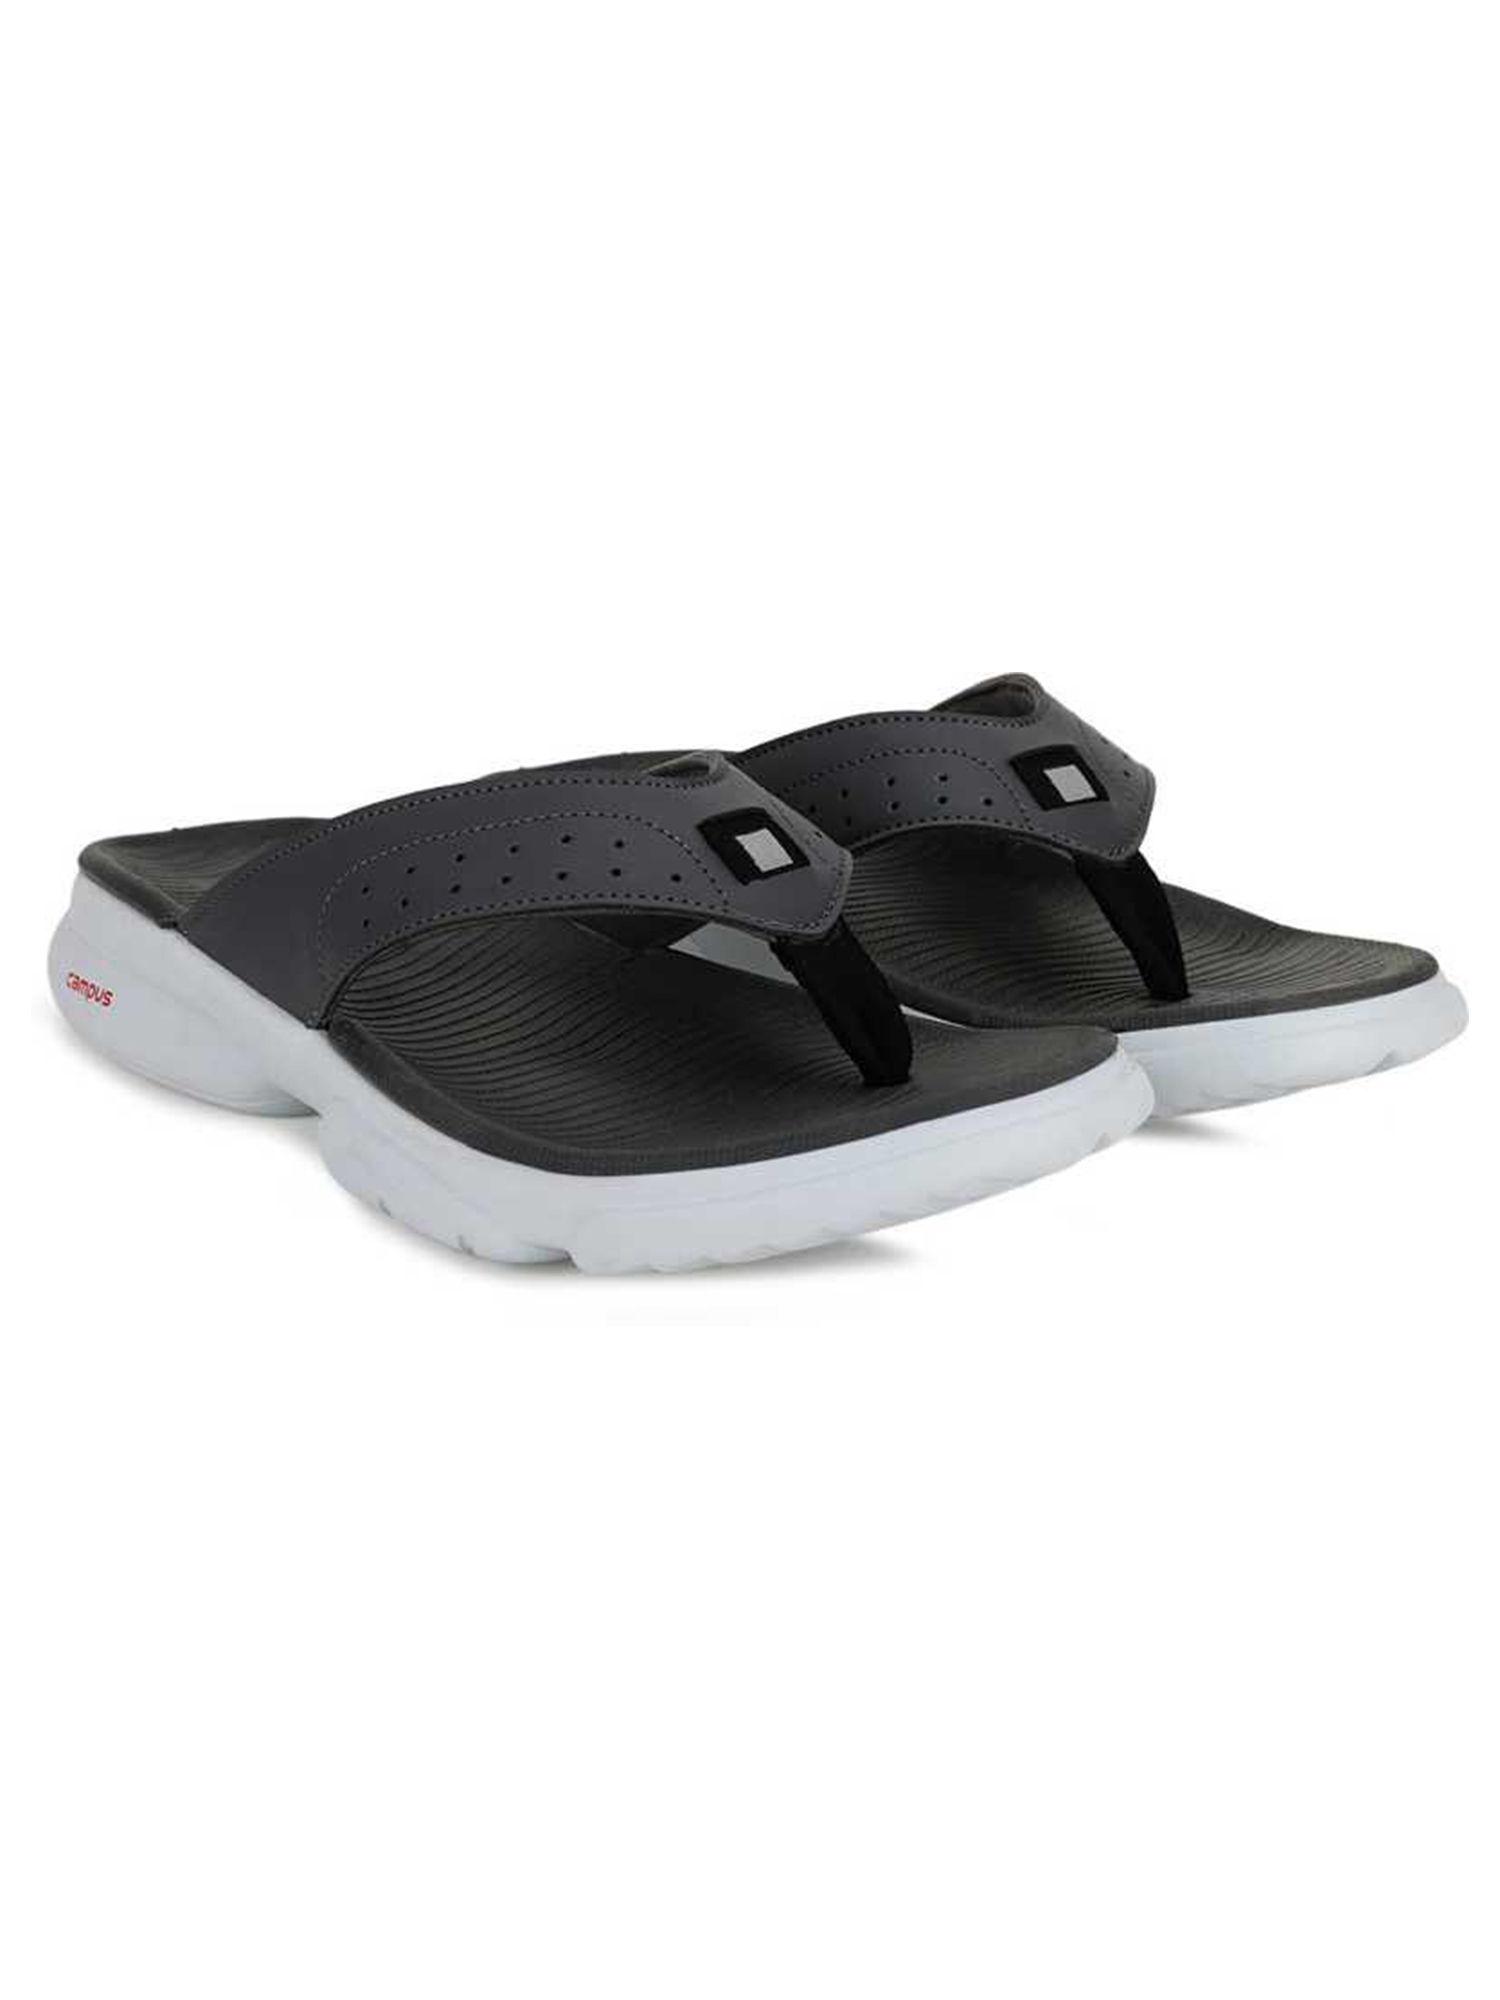 gc-sl-05 grey slippers for men